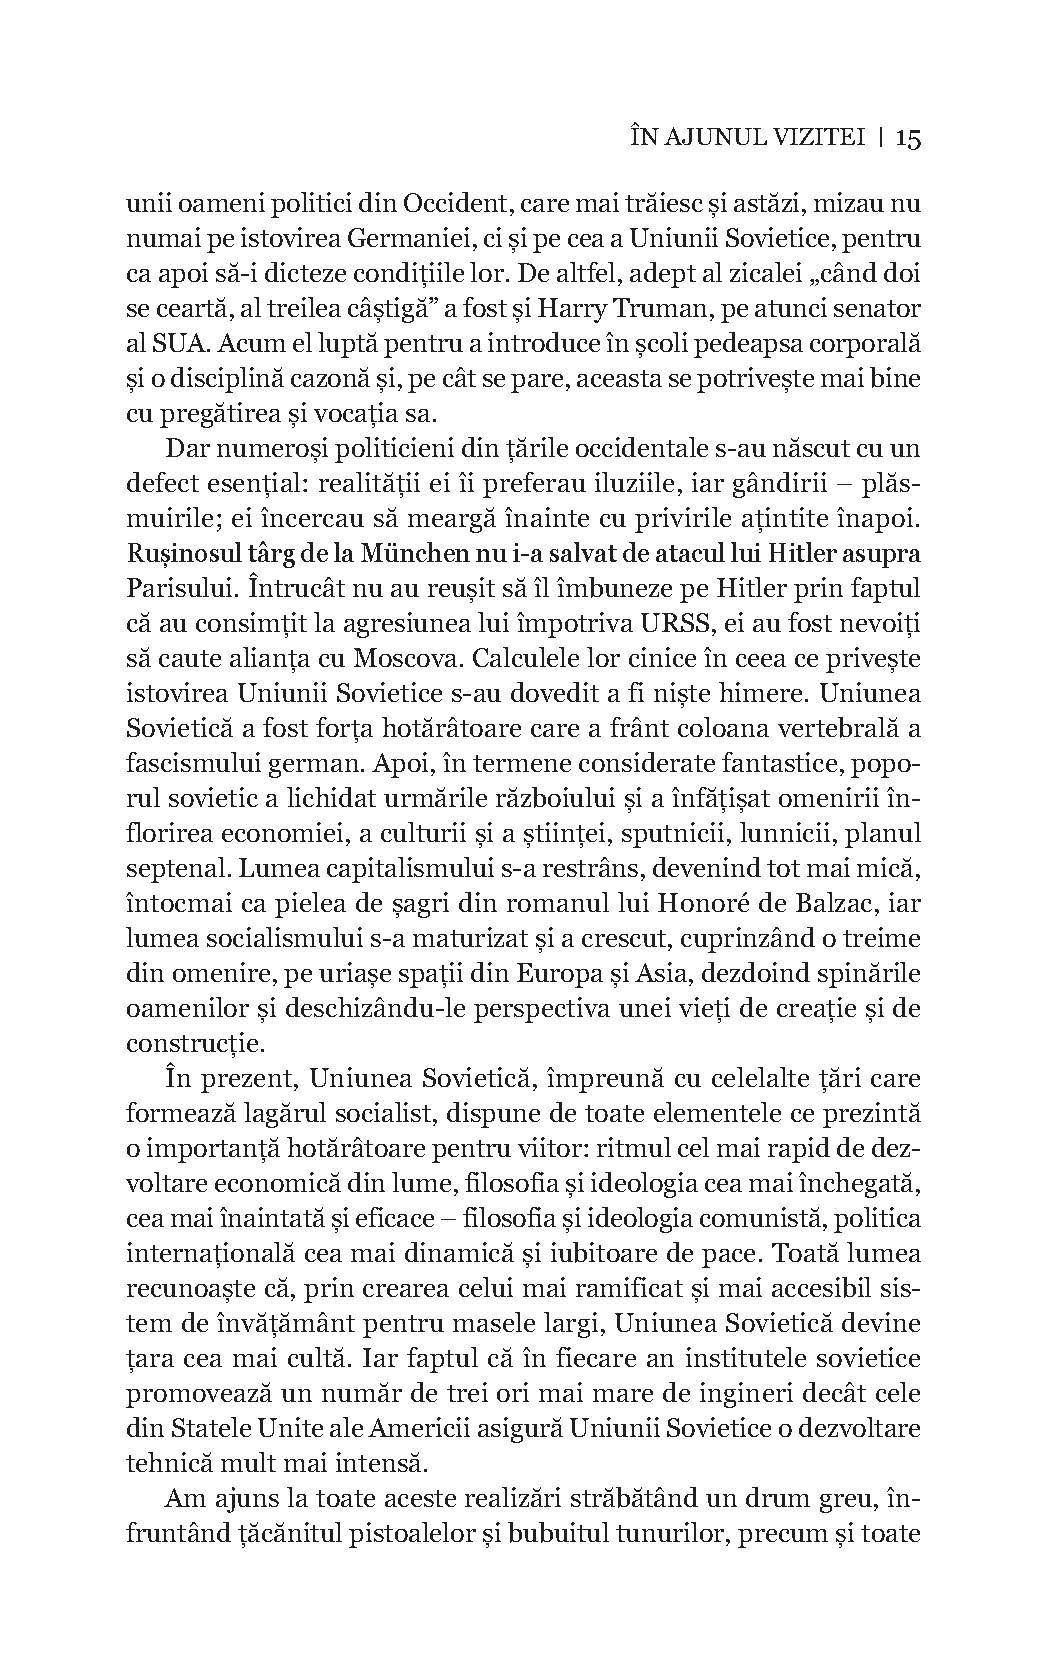 Fața în fața cu America - Editura Publisol - Ed. digitala - PDF - Publisol.ro